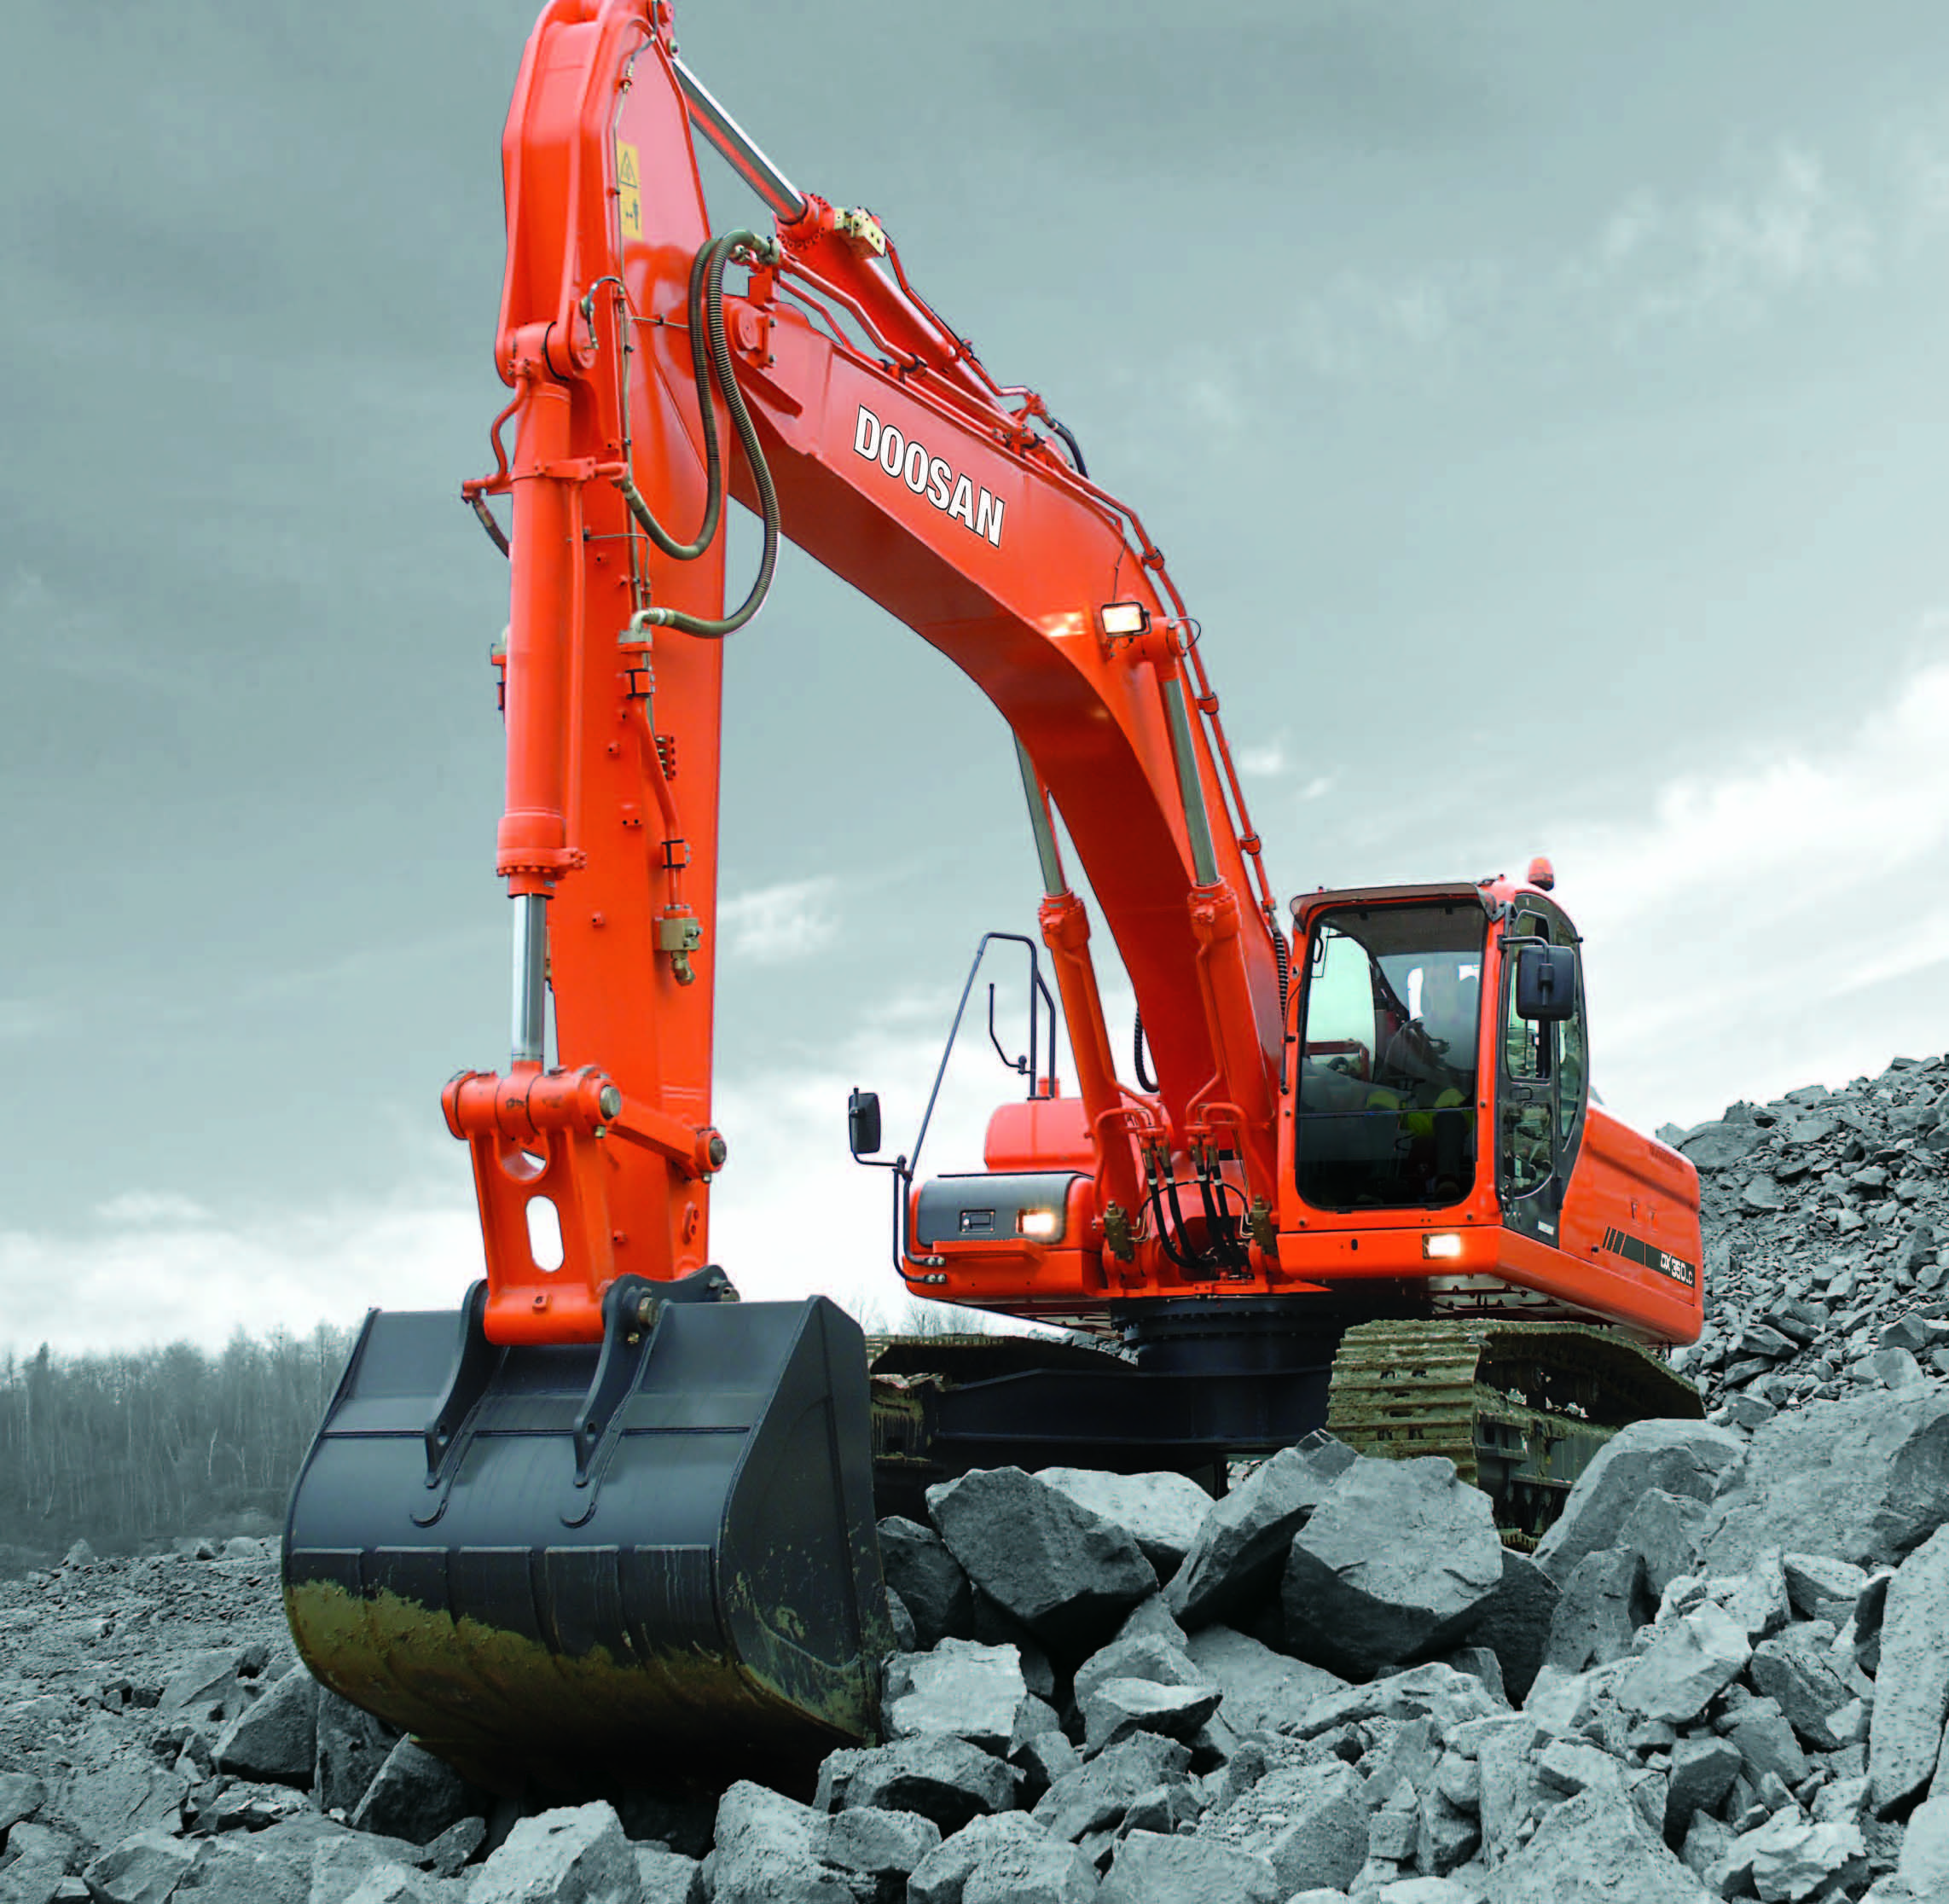 Download Powerful Komatsu Excavator at a Construction Site Wallpaper   Wallpaperscom